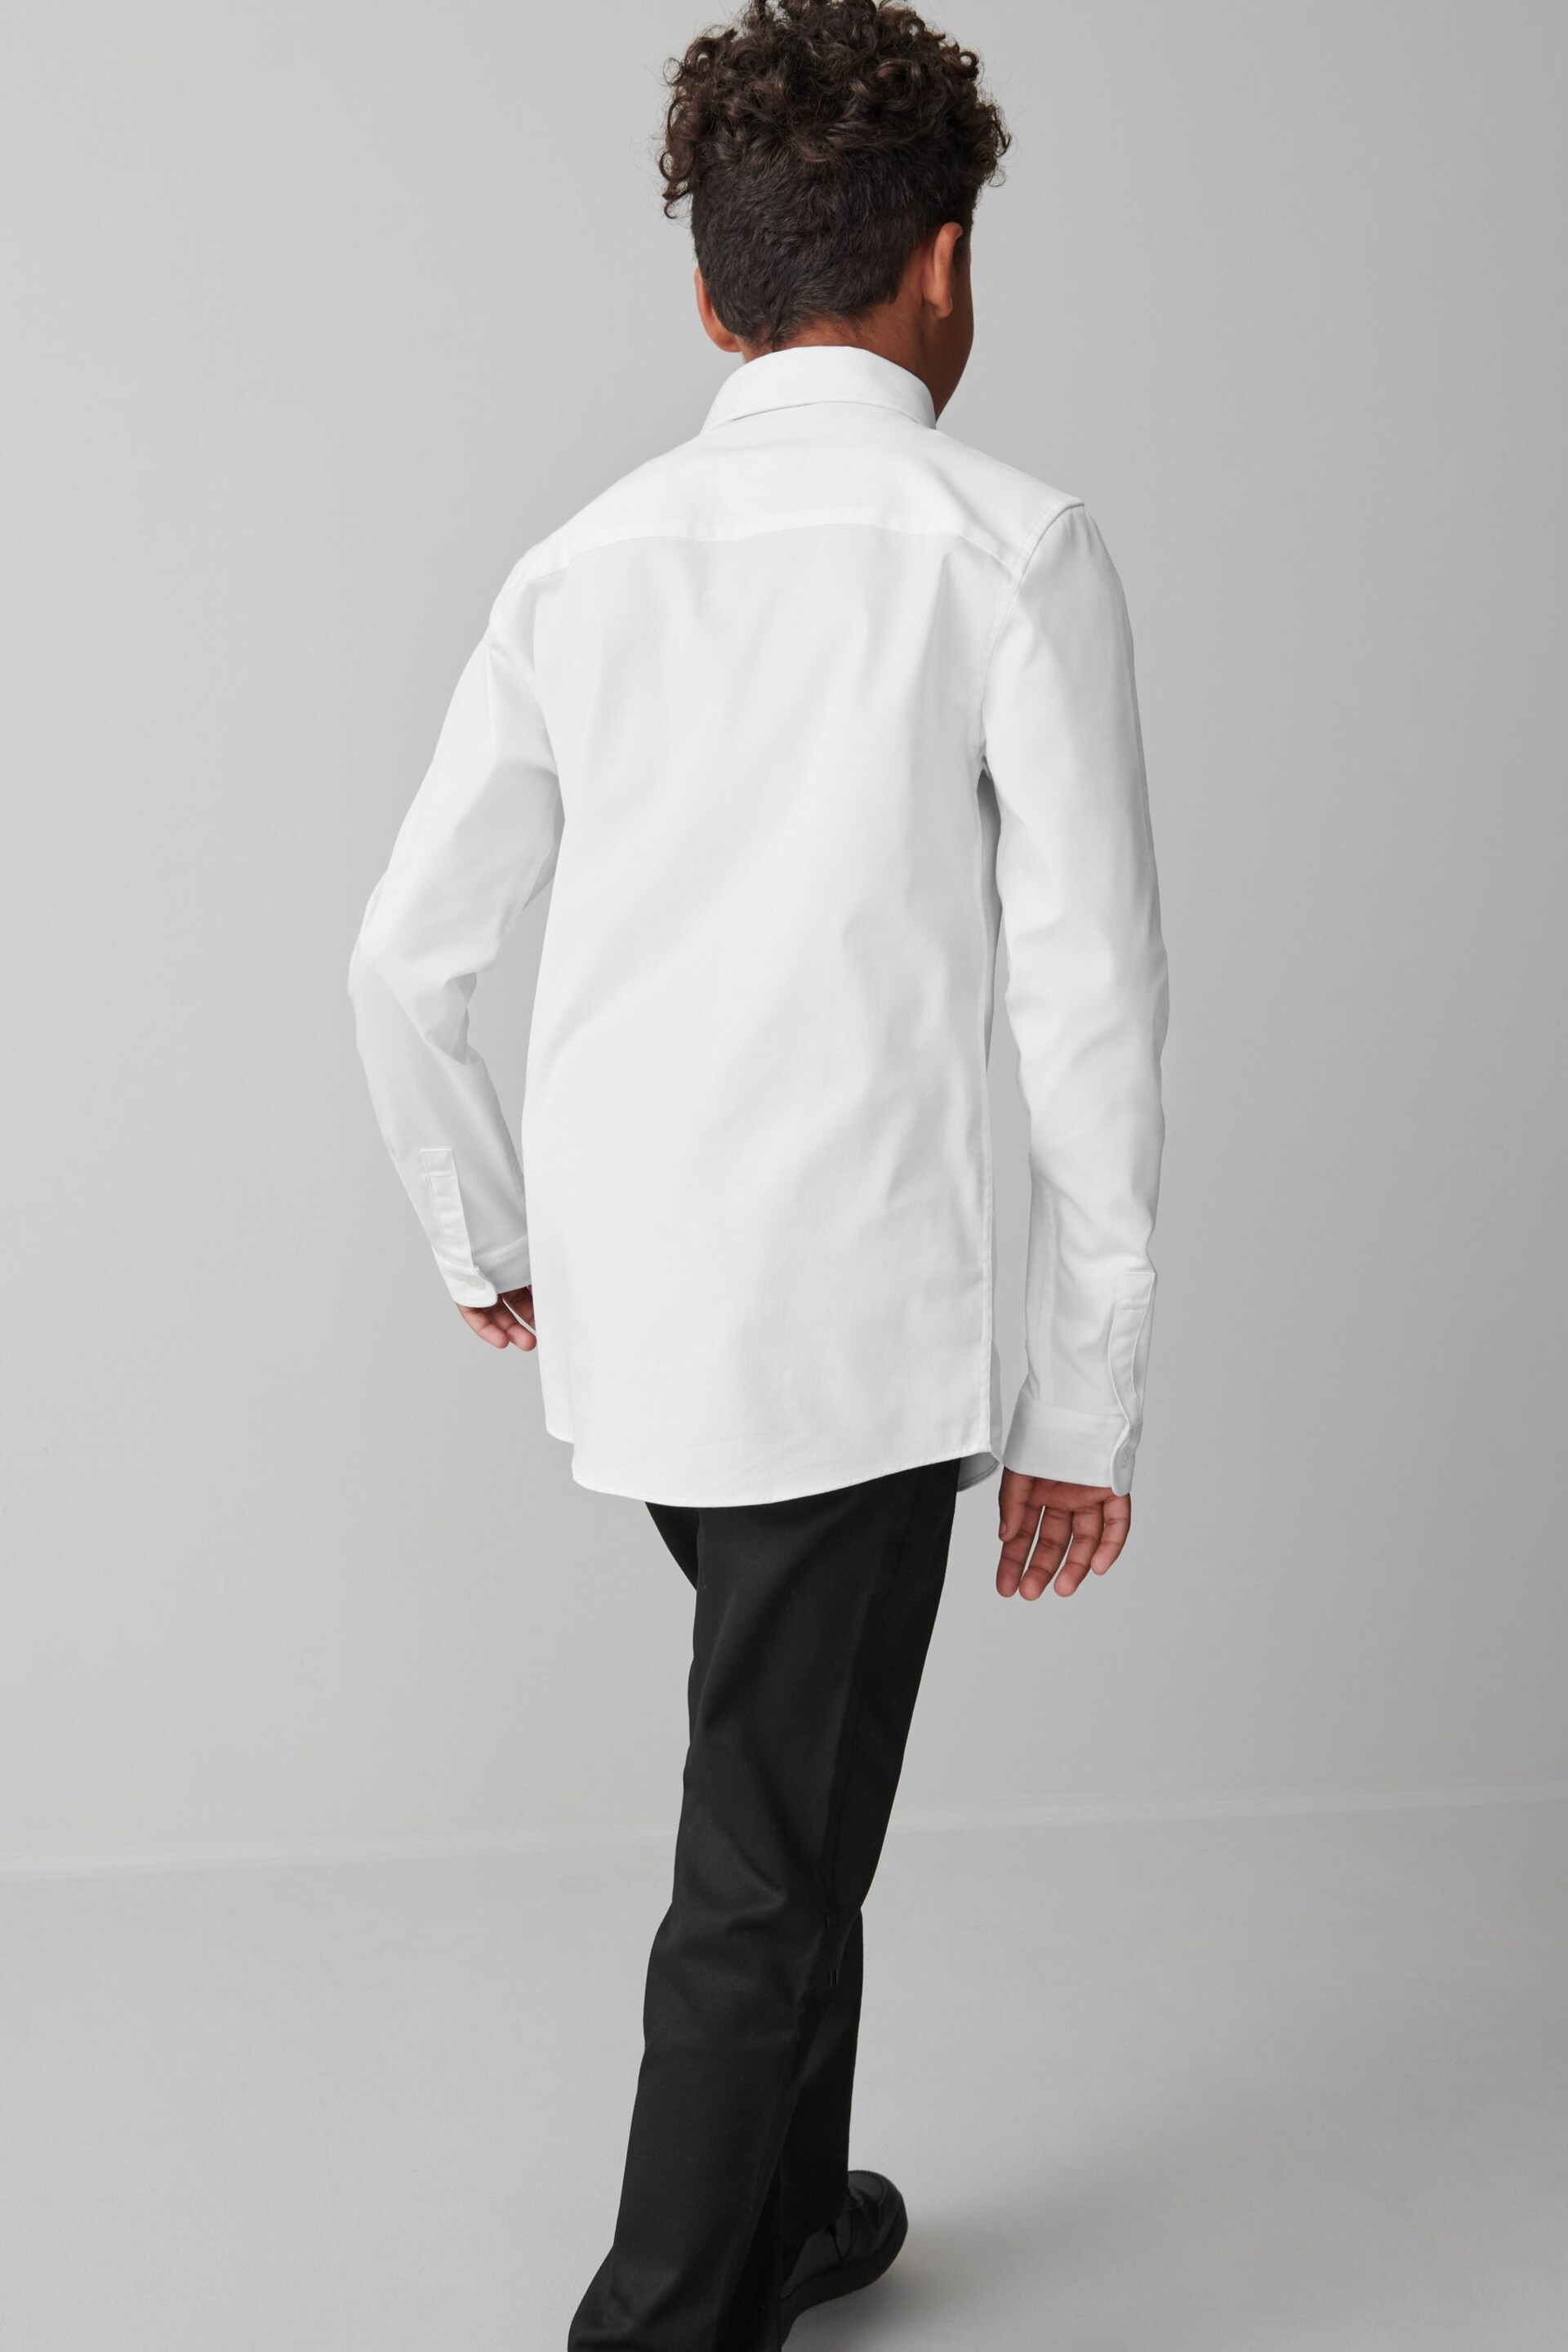 Clarks White Long Sleeve Senior Boys School Shirt with Stretch - Image 4 of 7